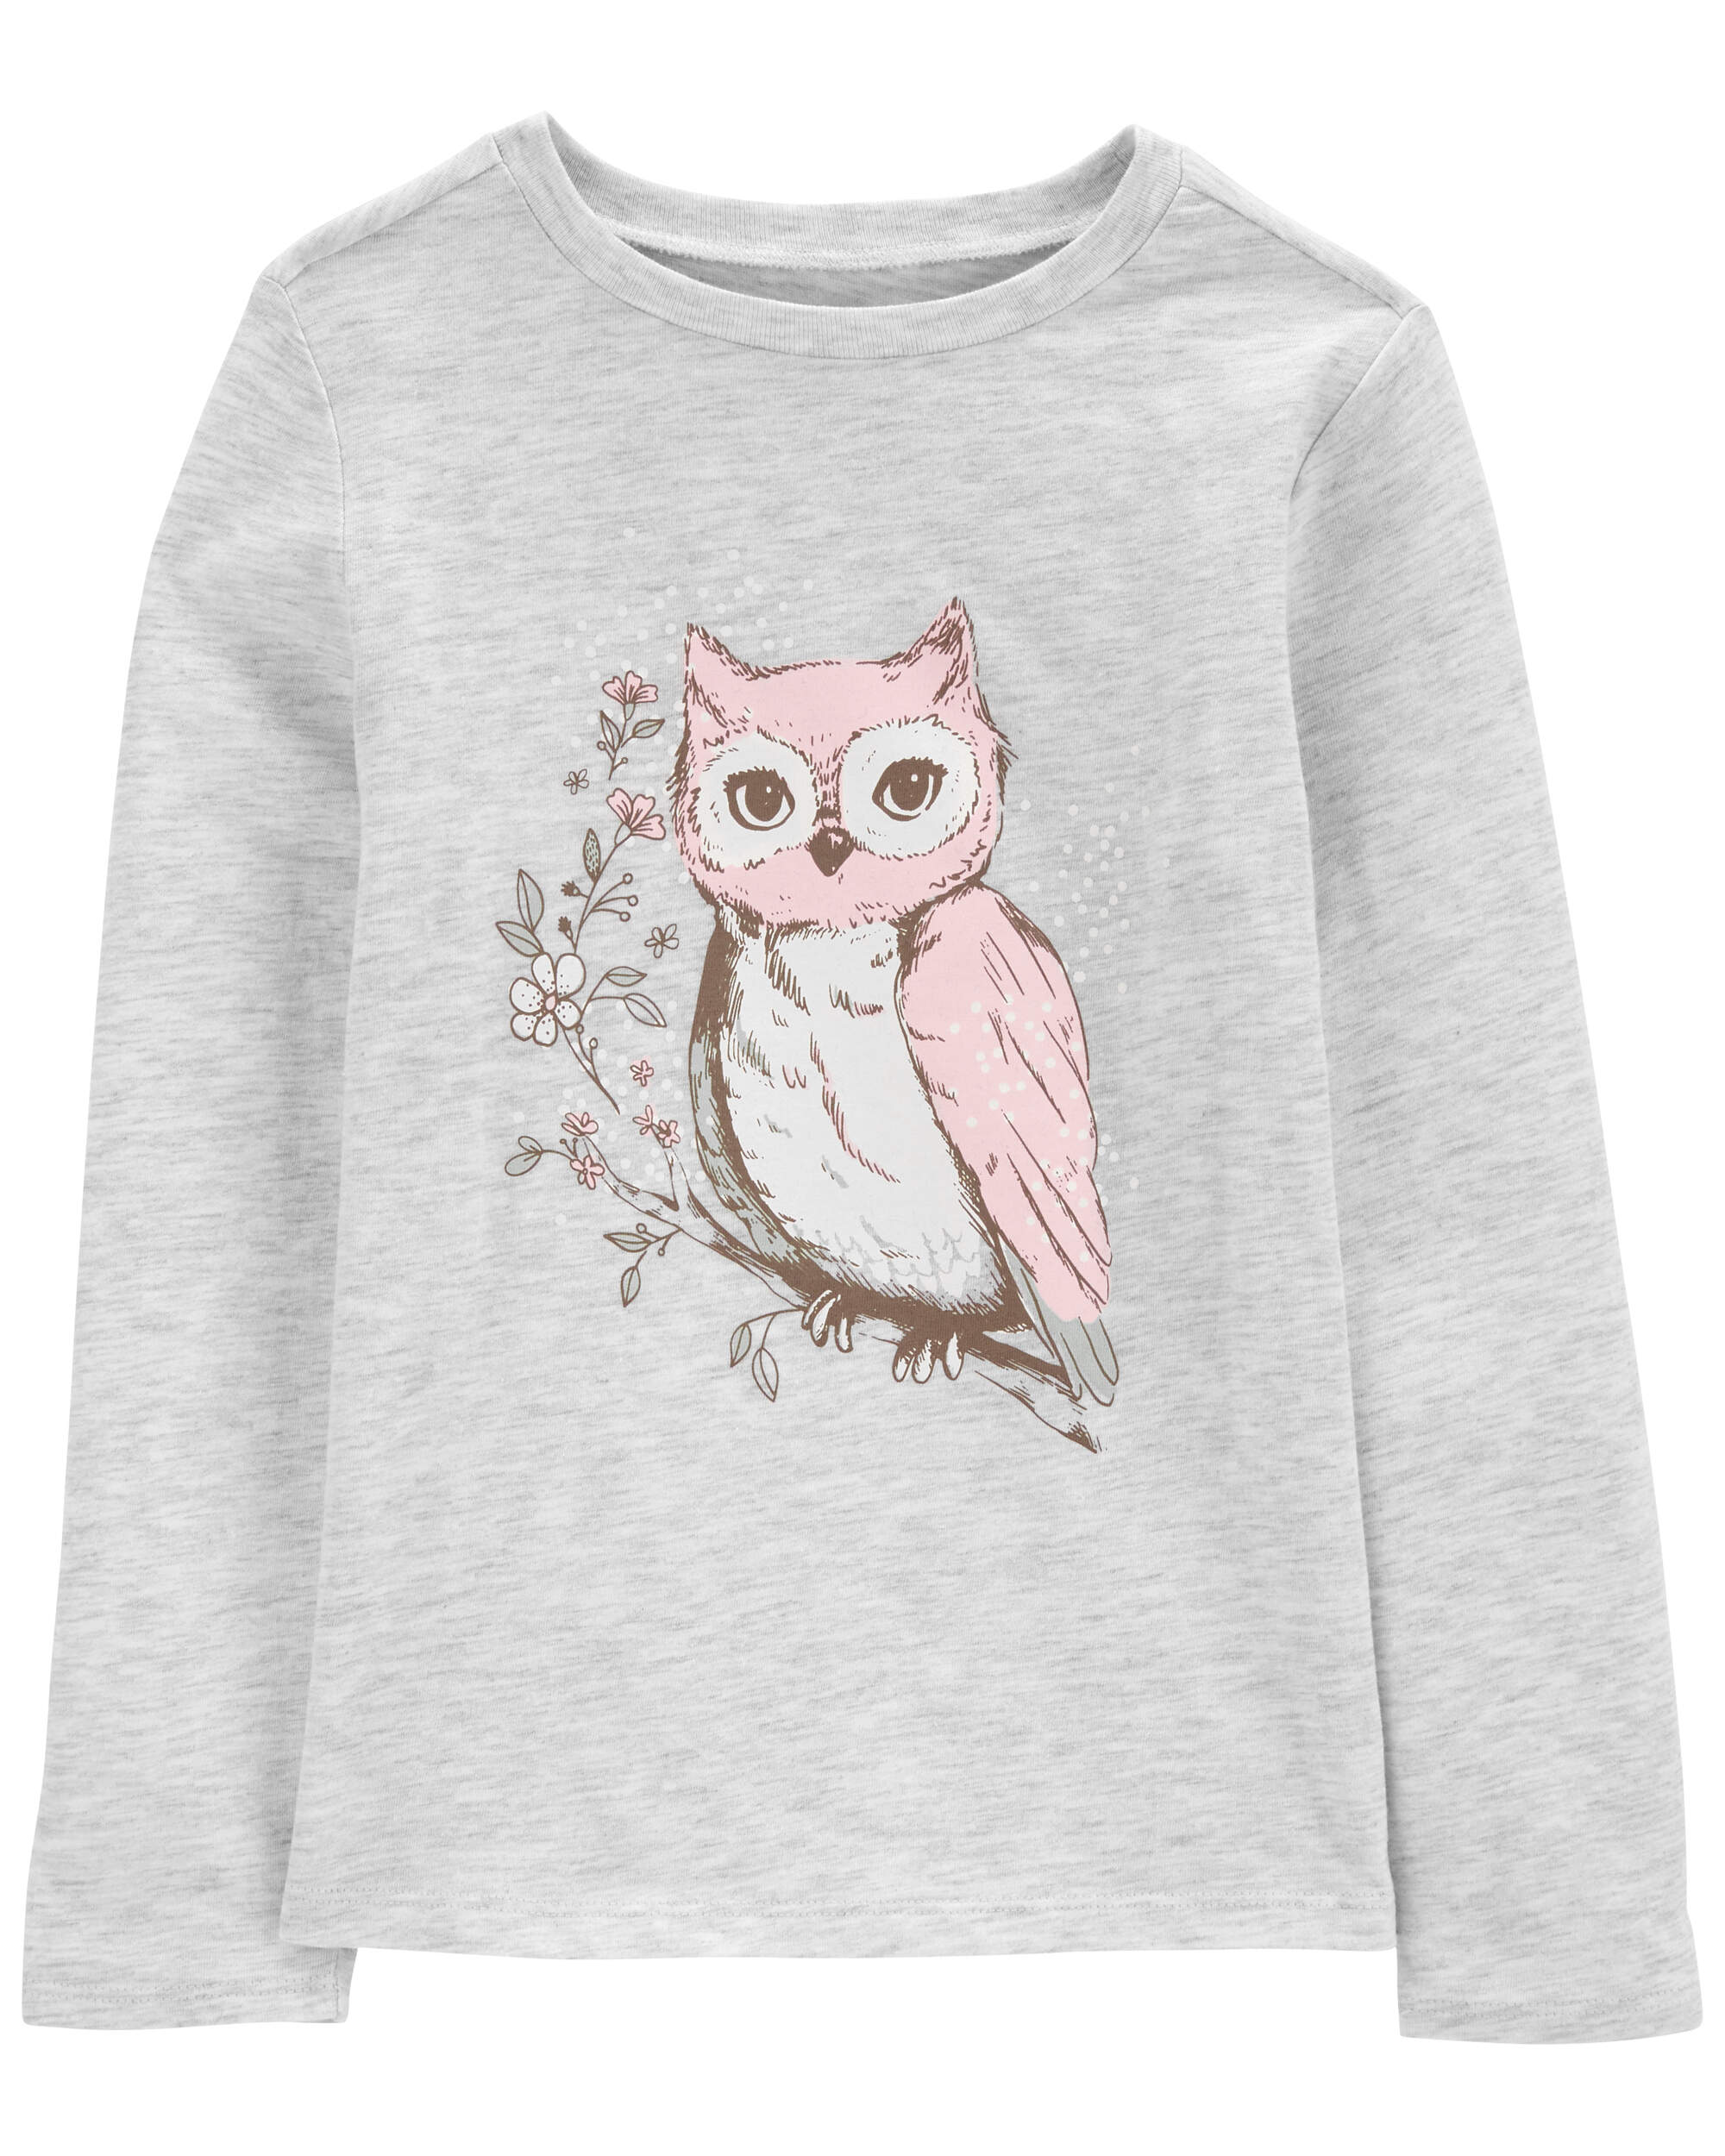 Kid Owl Long-Sleeve Graphic Tee